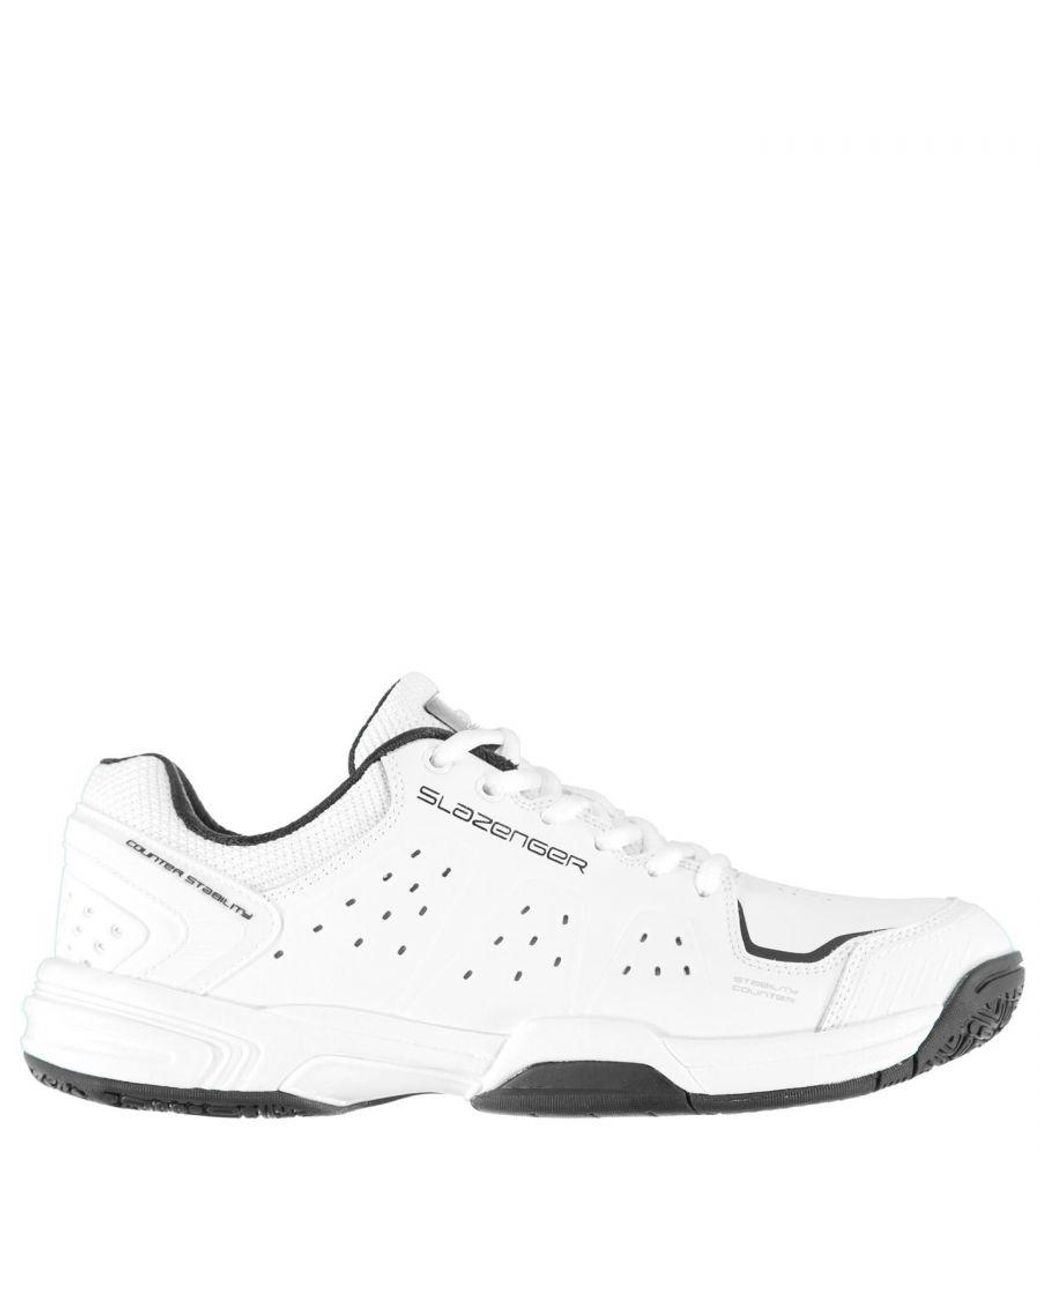 Slazenger | Mens Tennis Shoes | Low Trainers | SportsDirect.com